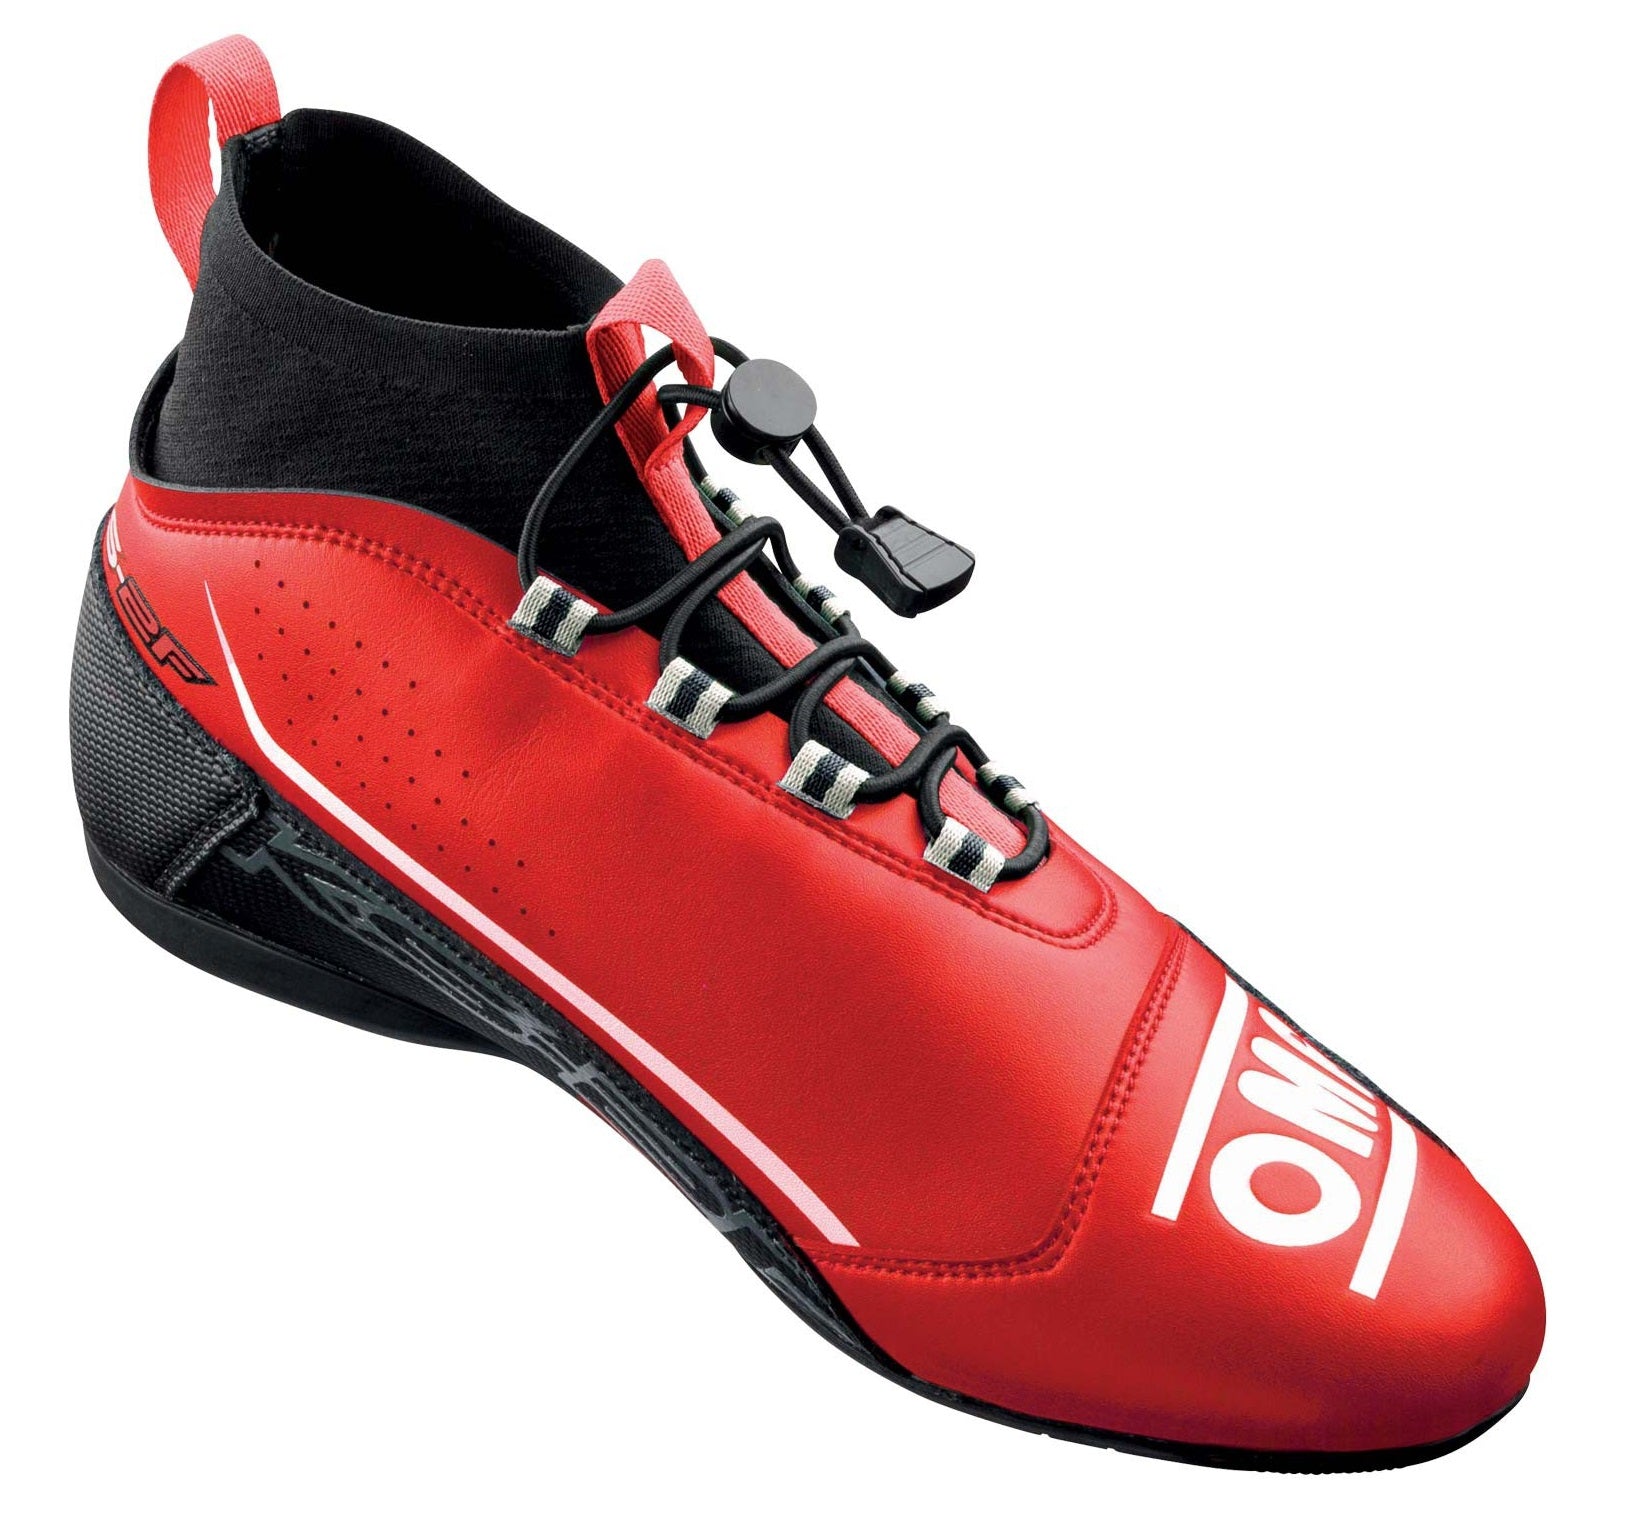 OMP KC0-0830-A01-060-47 KS-2F Karting shoes, red/black, size 47 Photo-1 